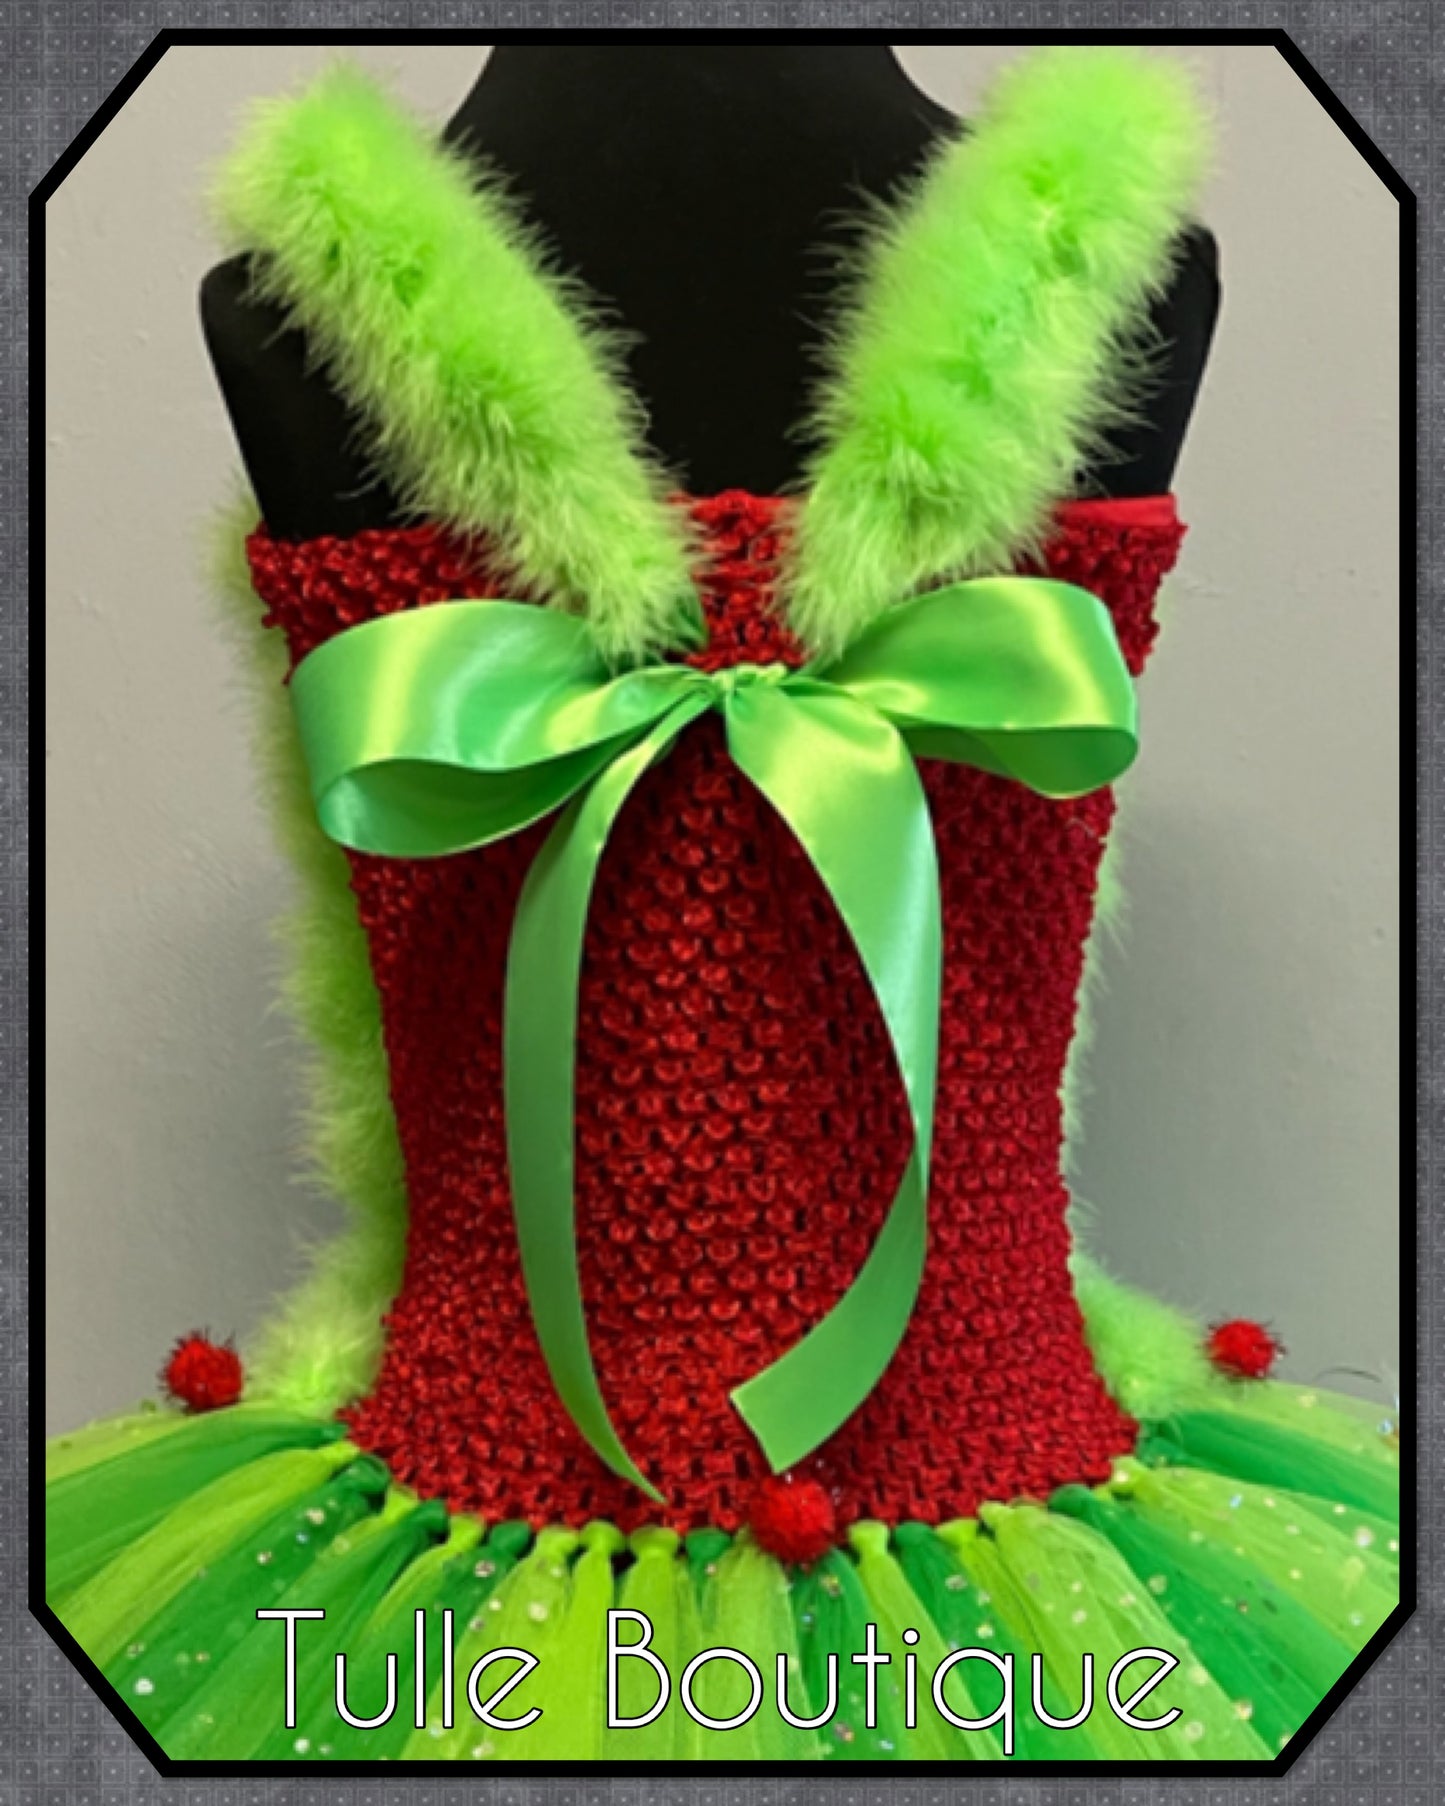 The Grinch Christmas jumper inspired tutu dress